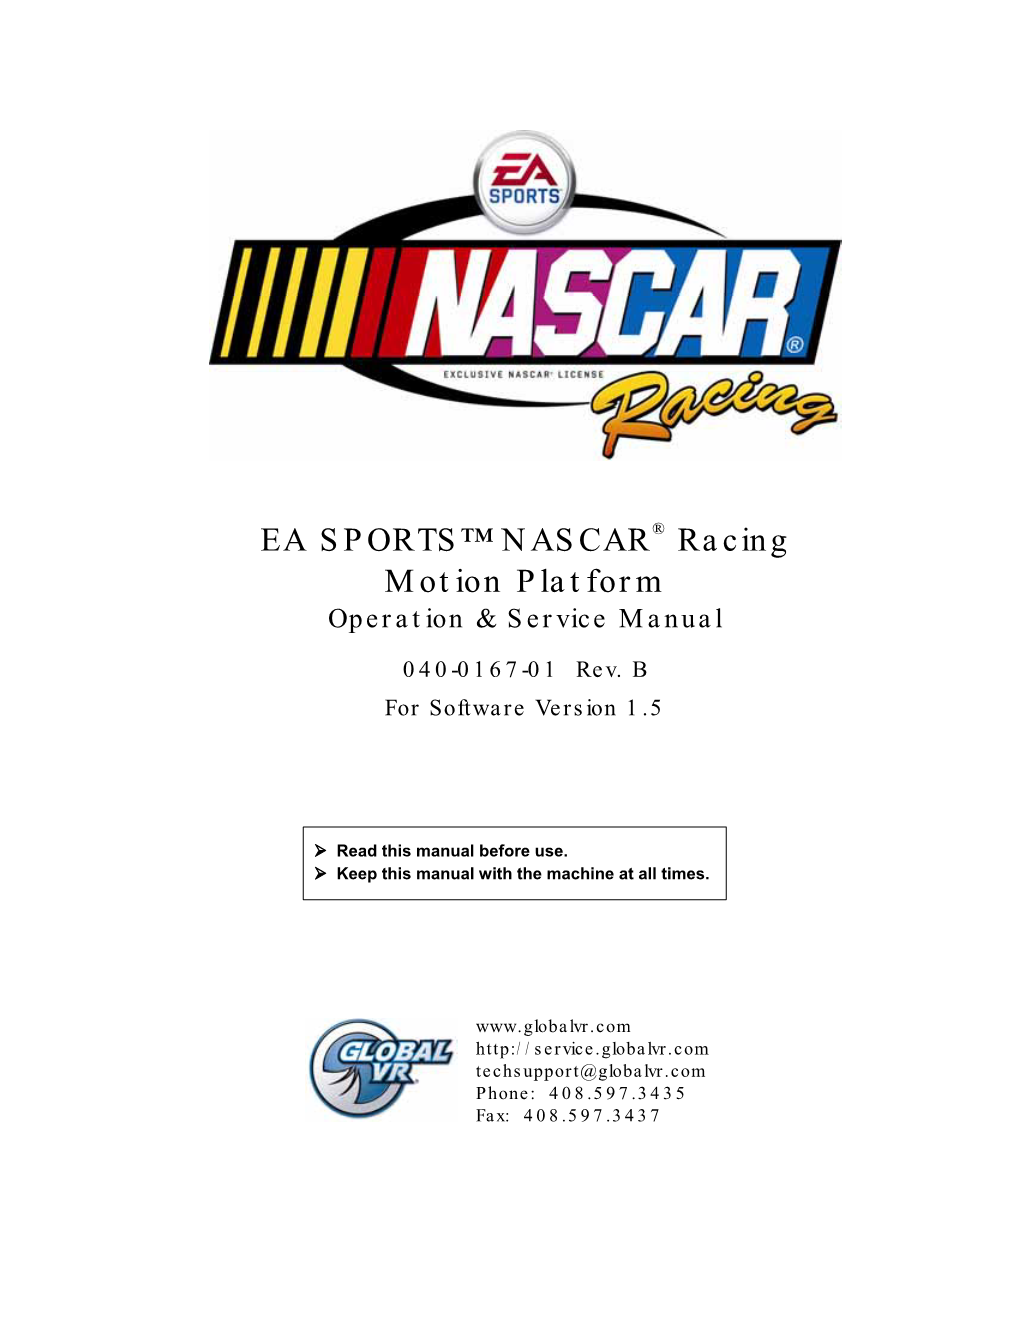 NASCAR Racing Version 1.5 Motion Platform Operation & Service Manual